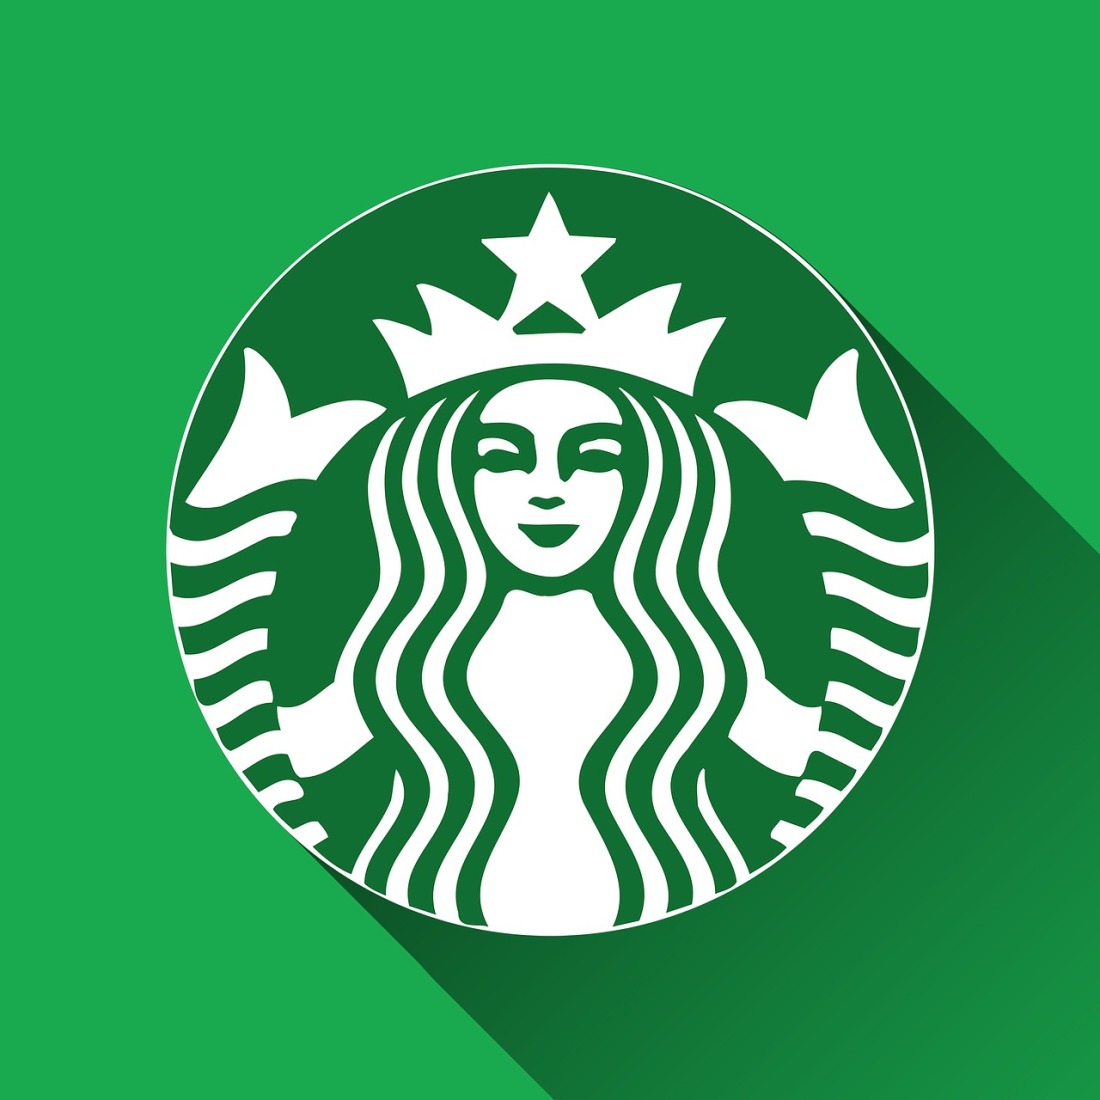 Starbucks menu design